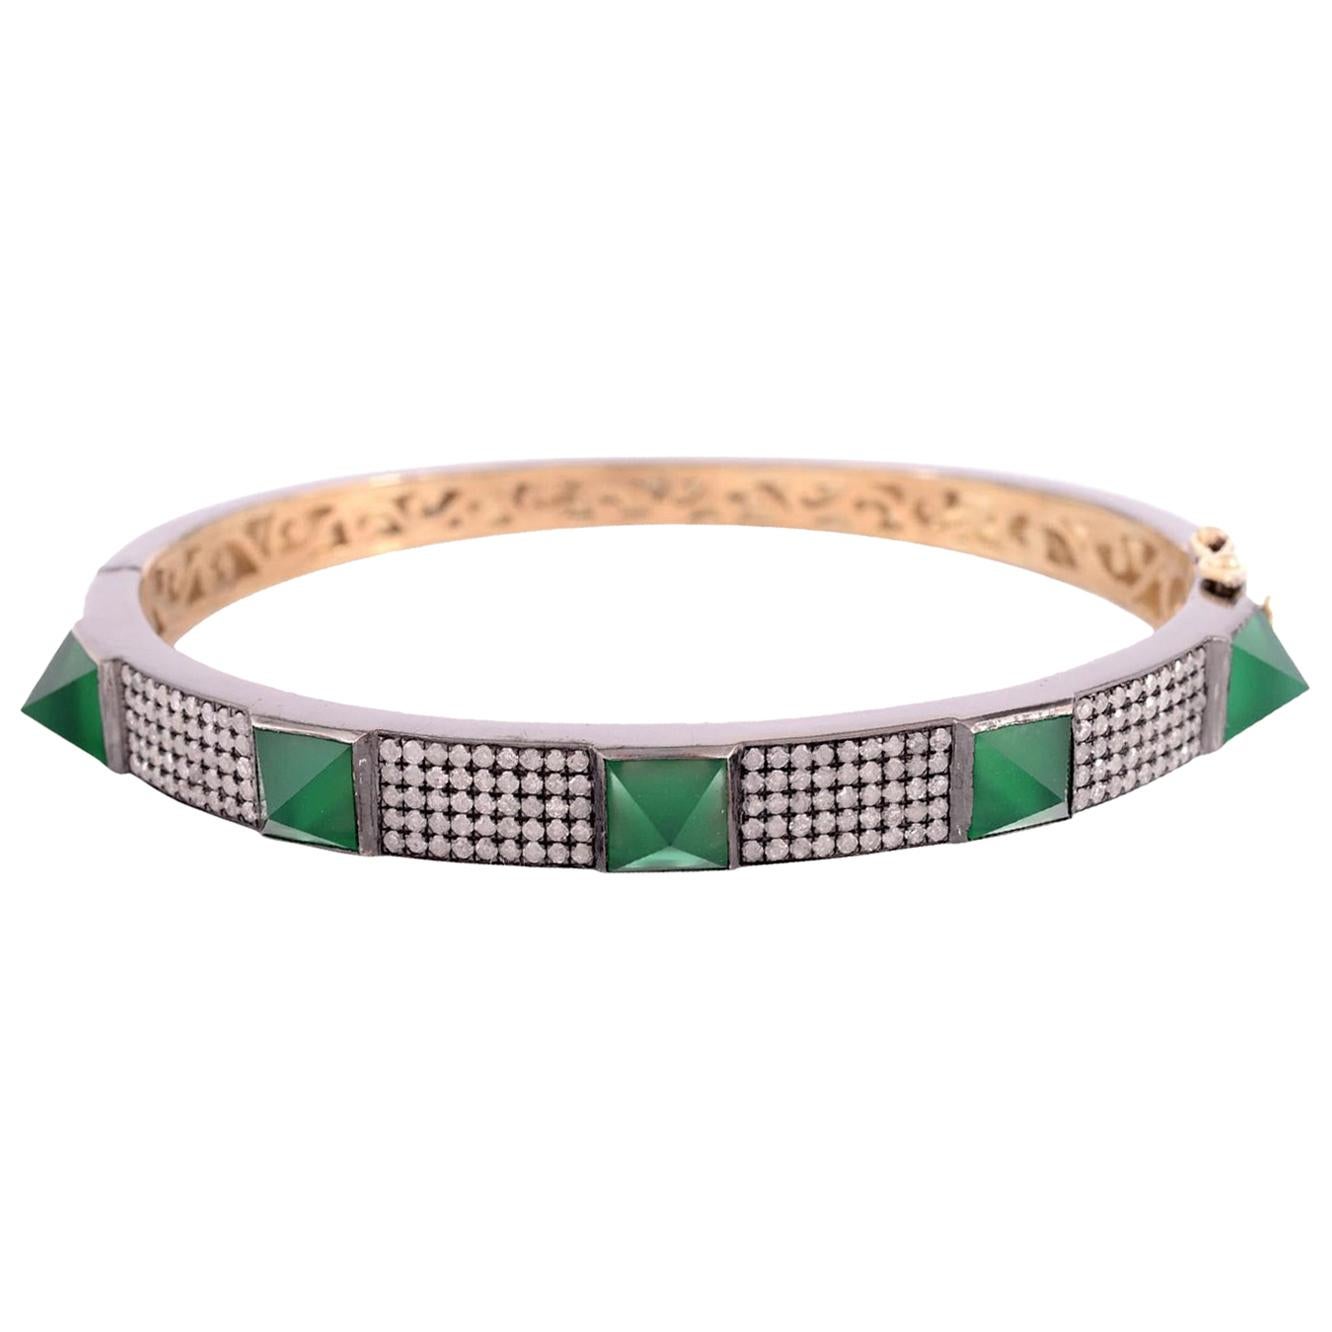 Spike Diamond Green Onyx Bangle Bracelet